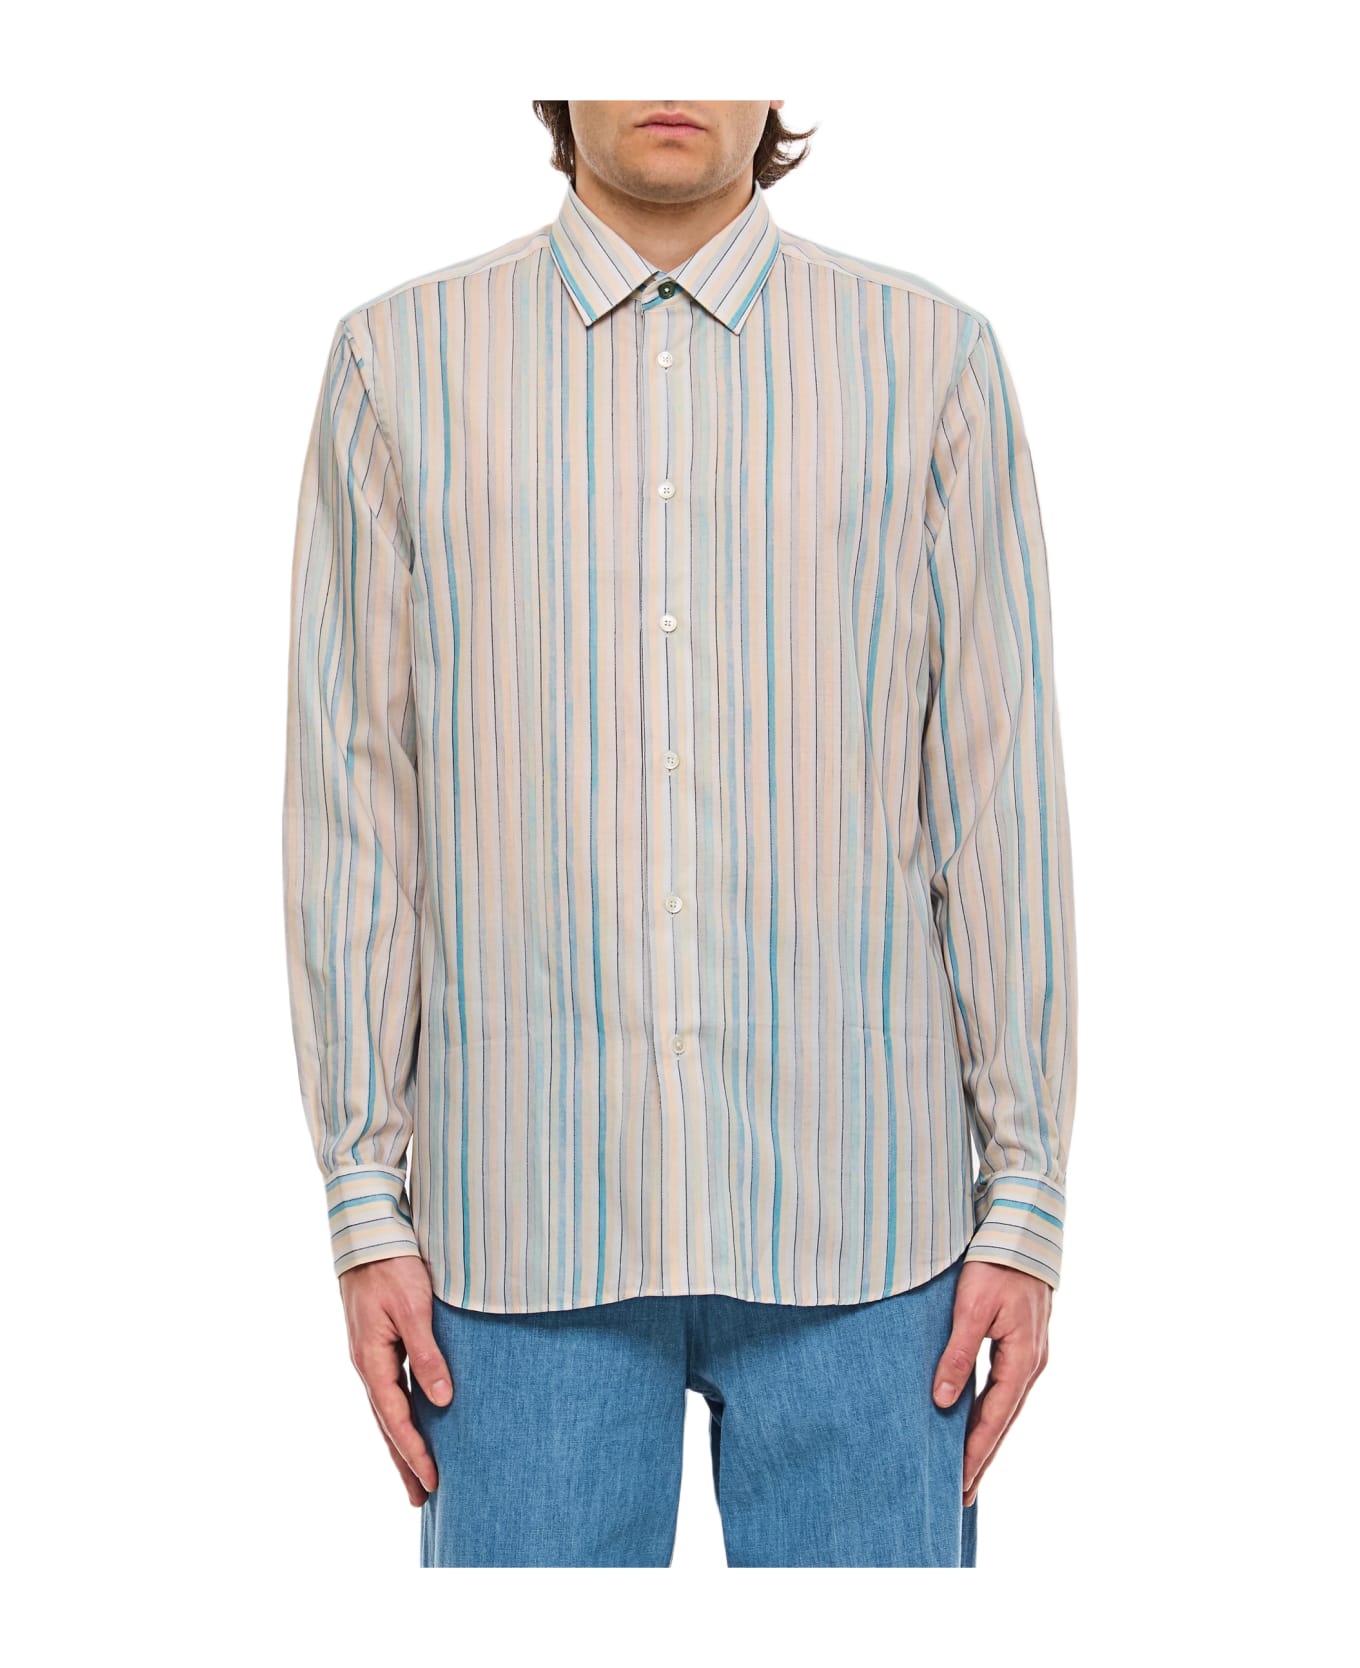 Paul Smith Mens S/c Tailored Fit Shirt - Panna azzurro